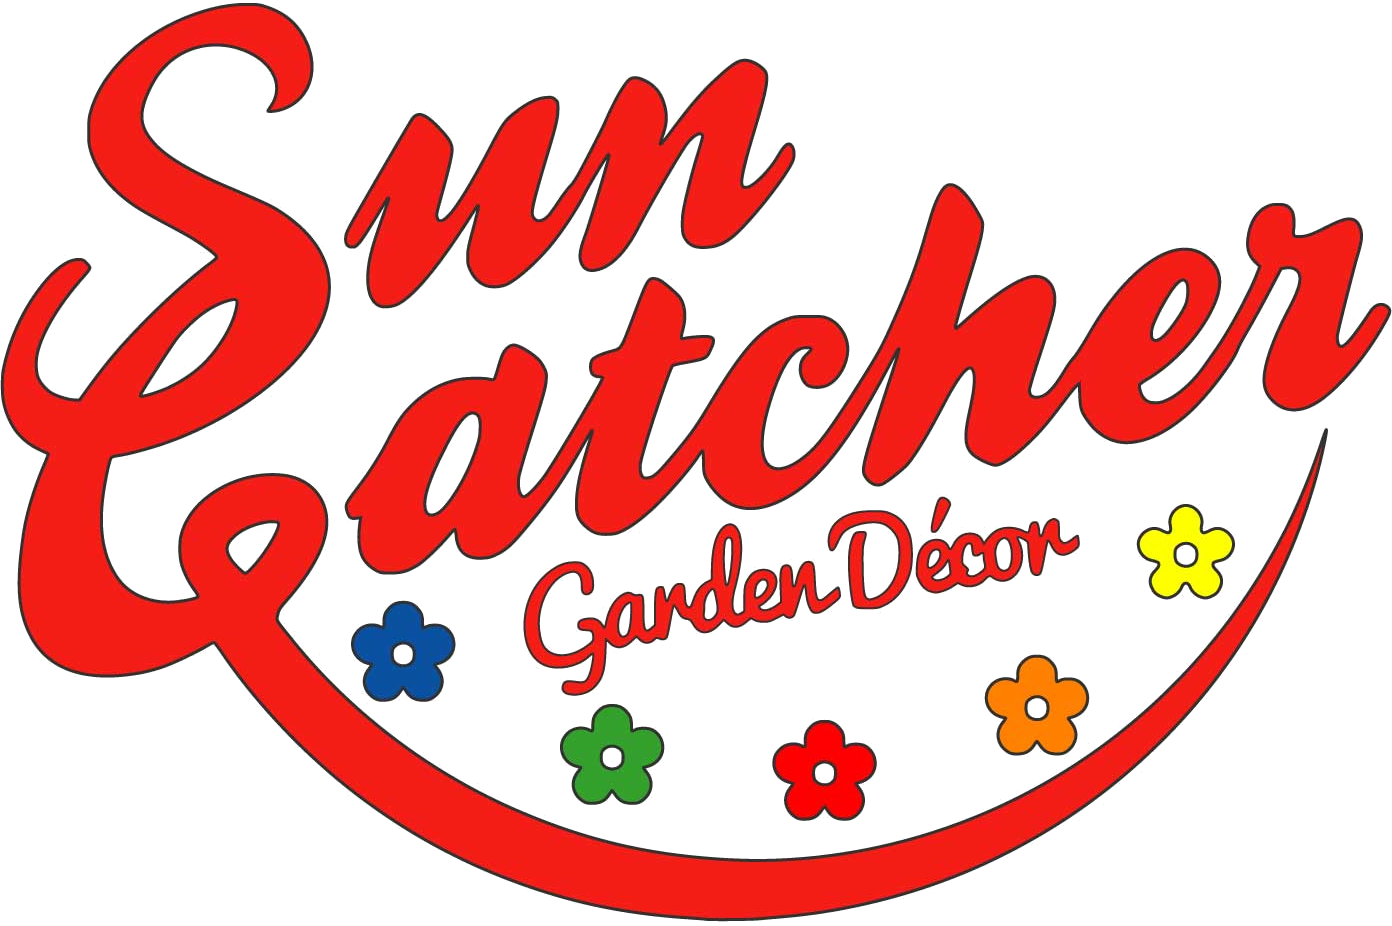 SunCatcher